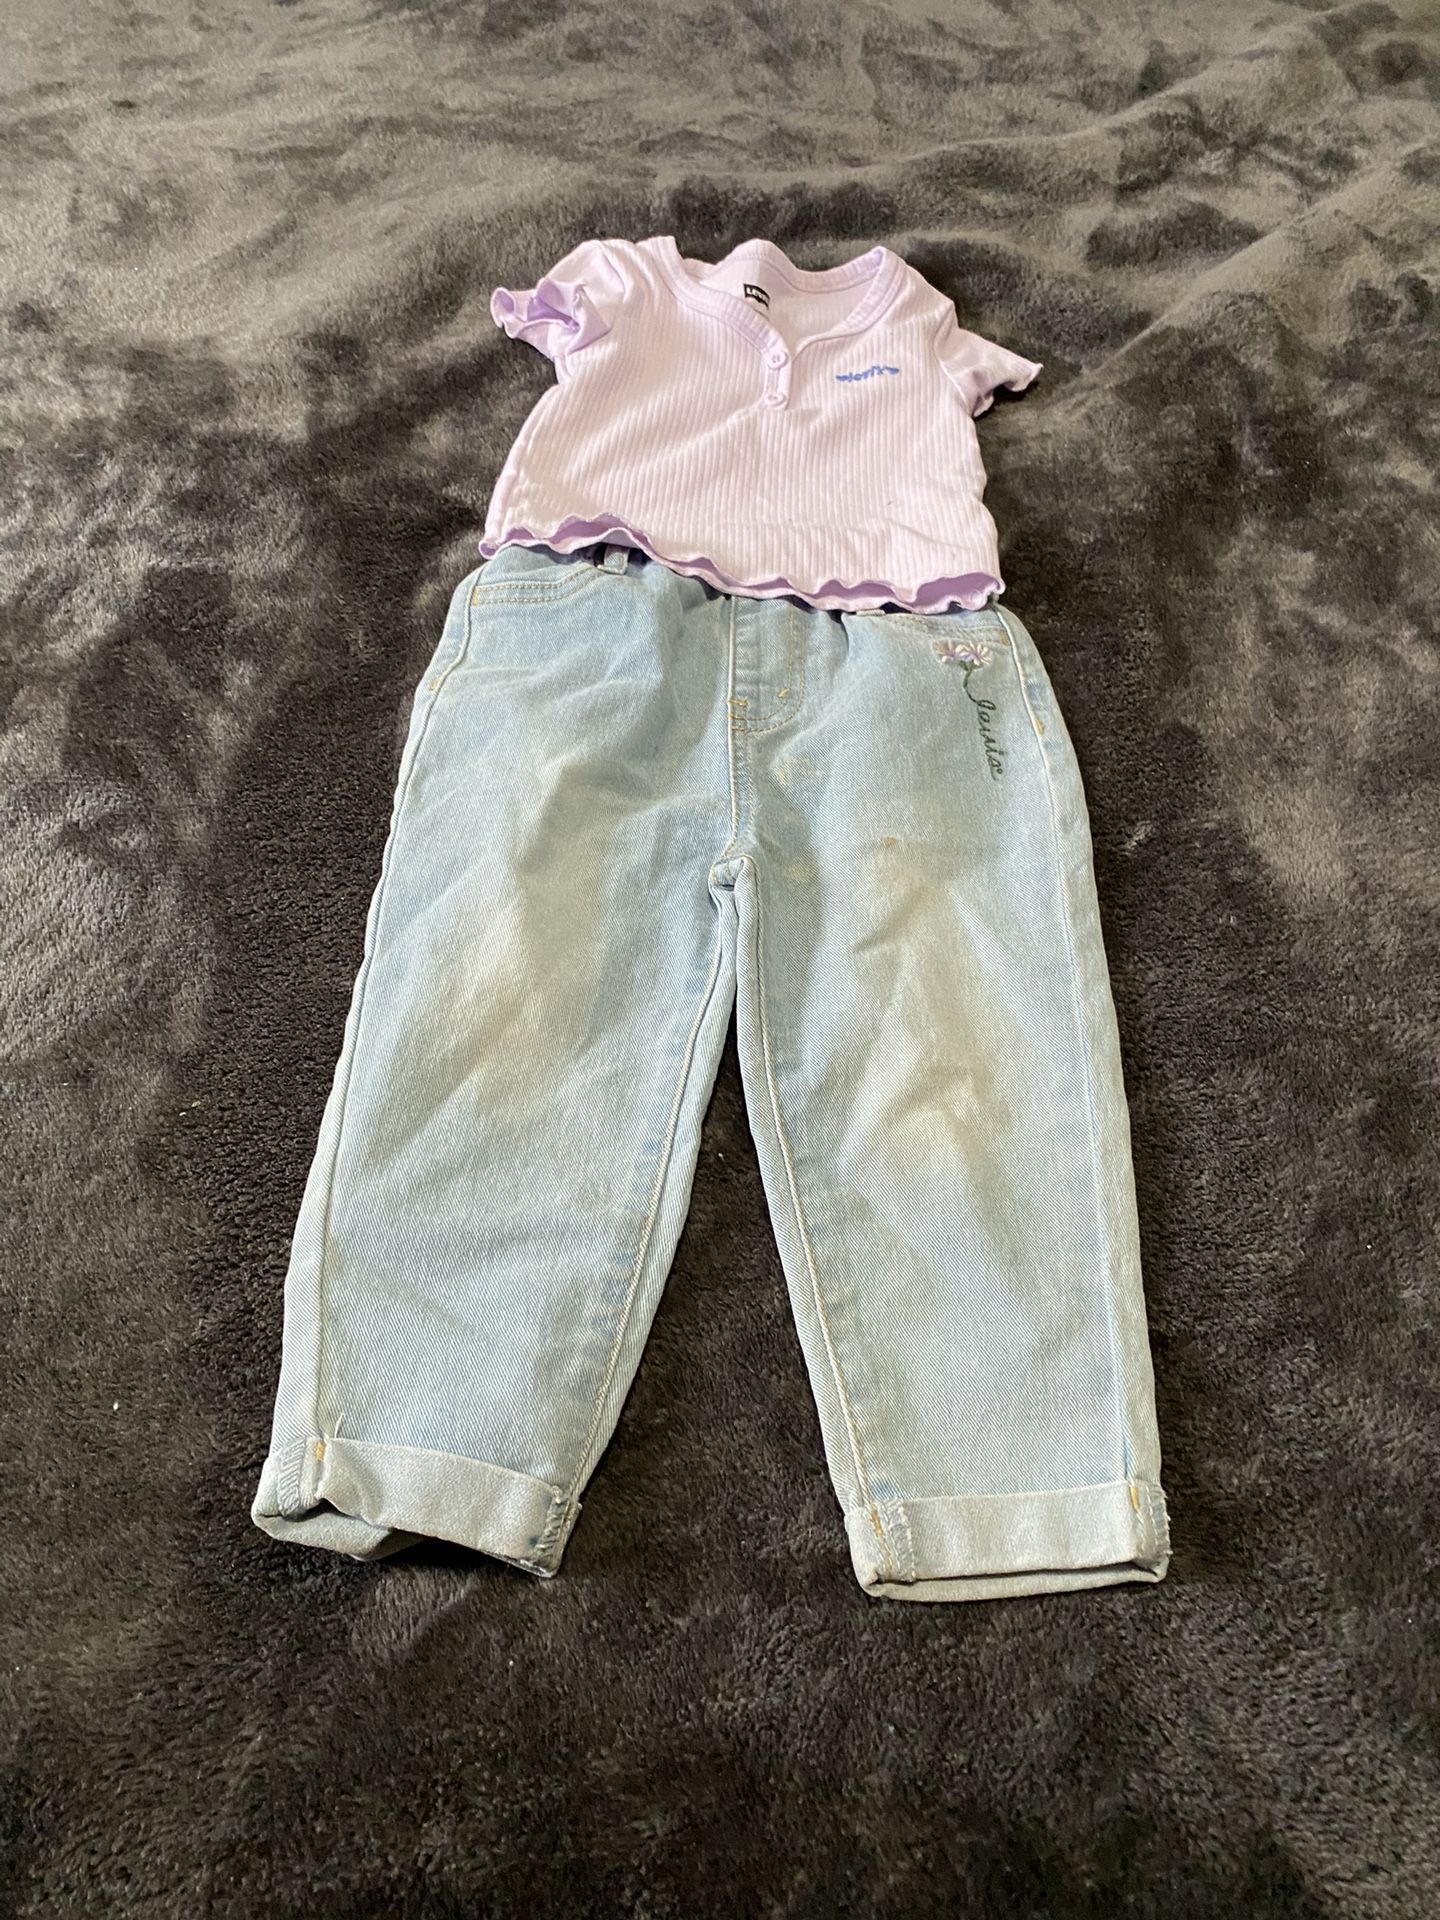 Toddler Girls Levi’s Jeans Set Size 18 Months 